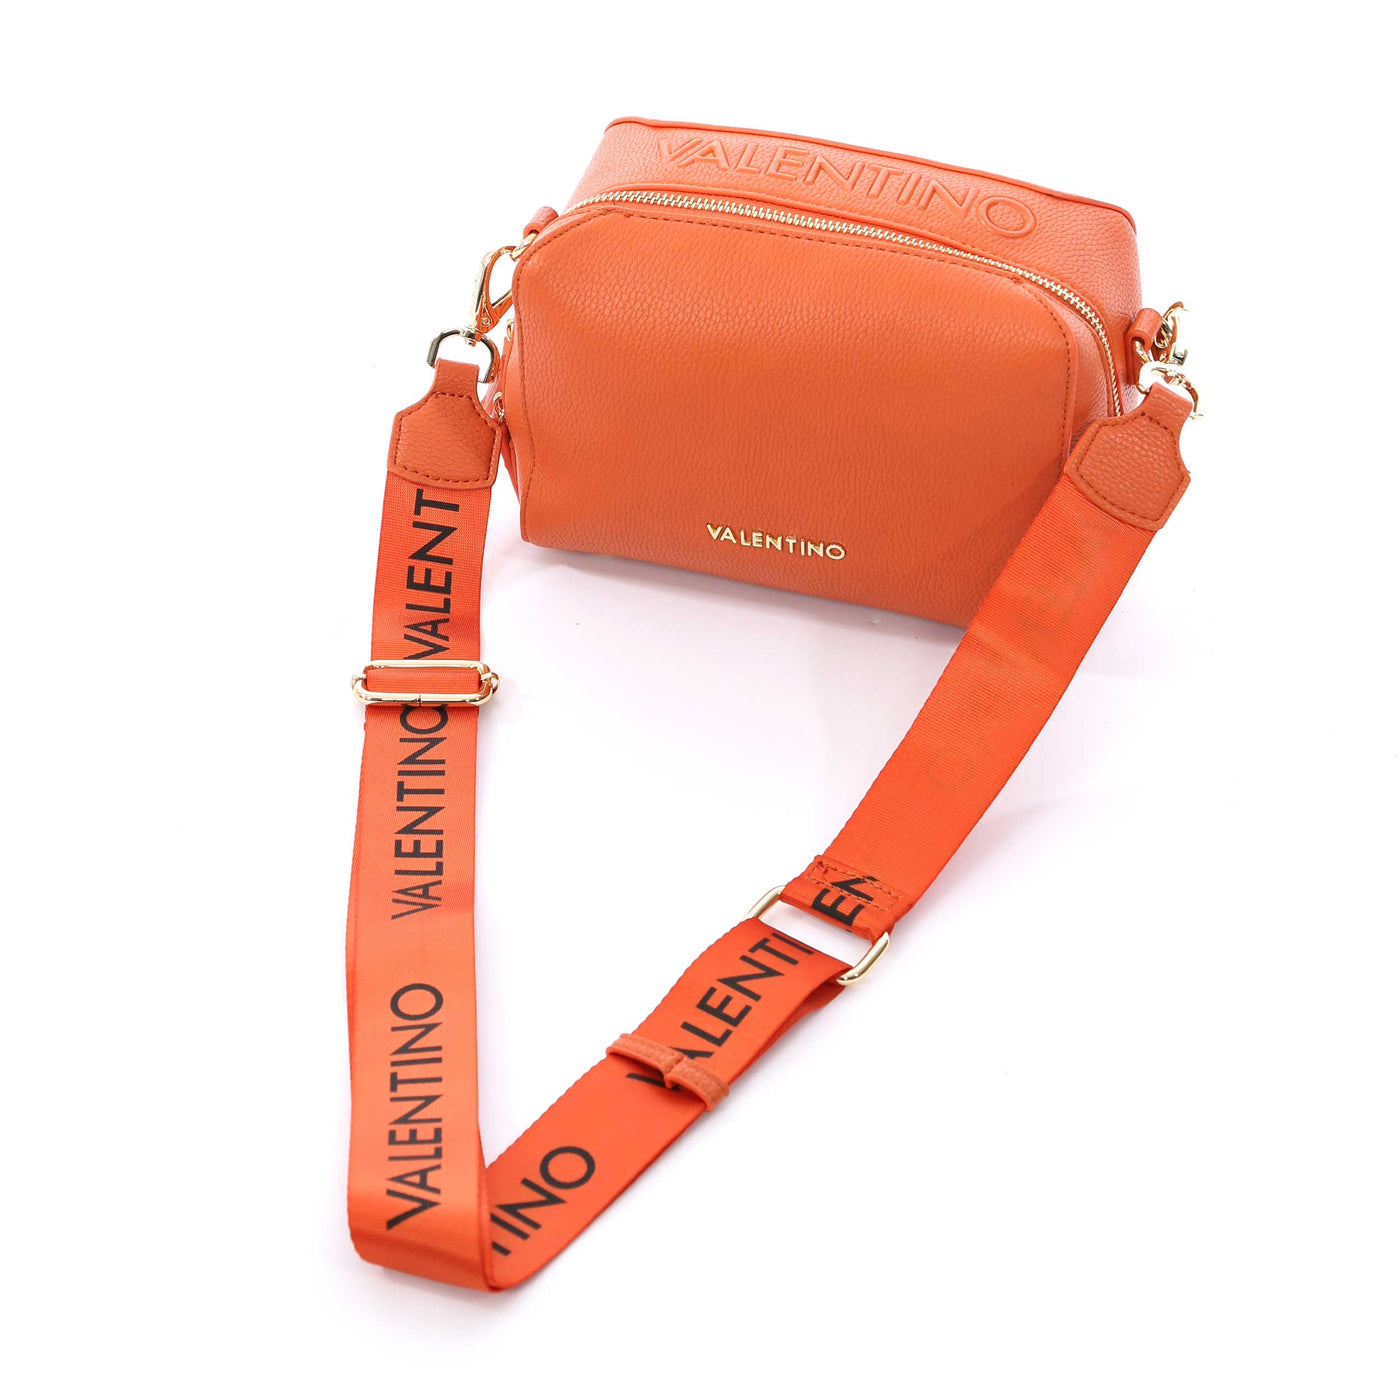 Valentino Bags Pattie Camera Bag in Arancio Orange Front